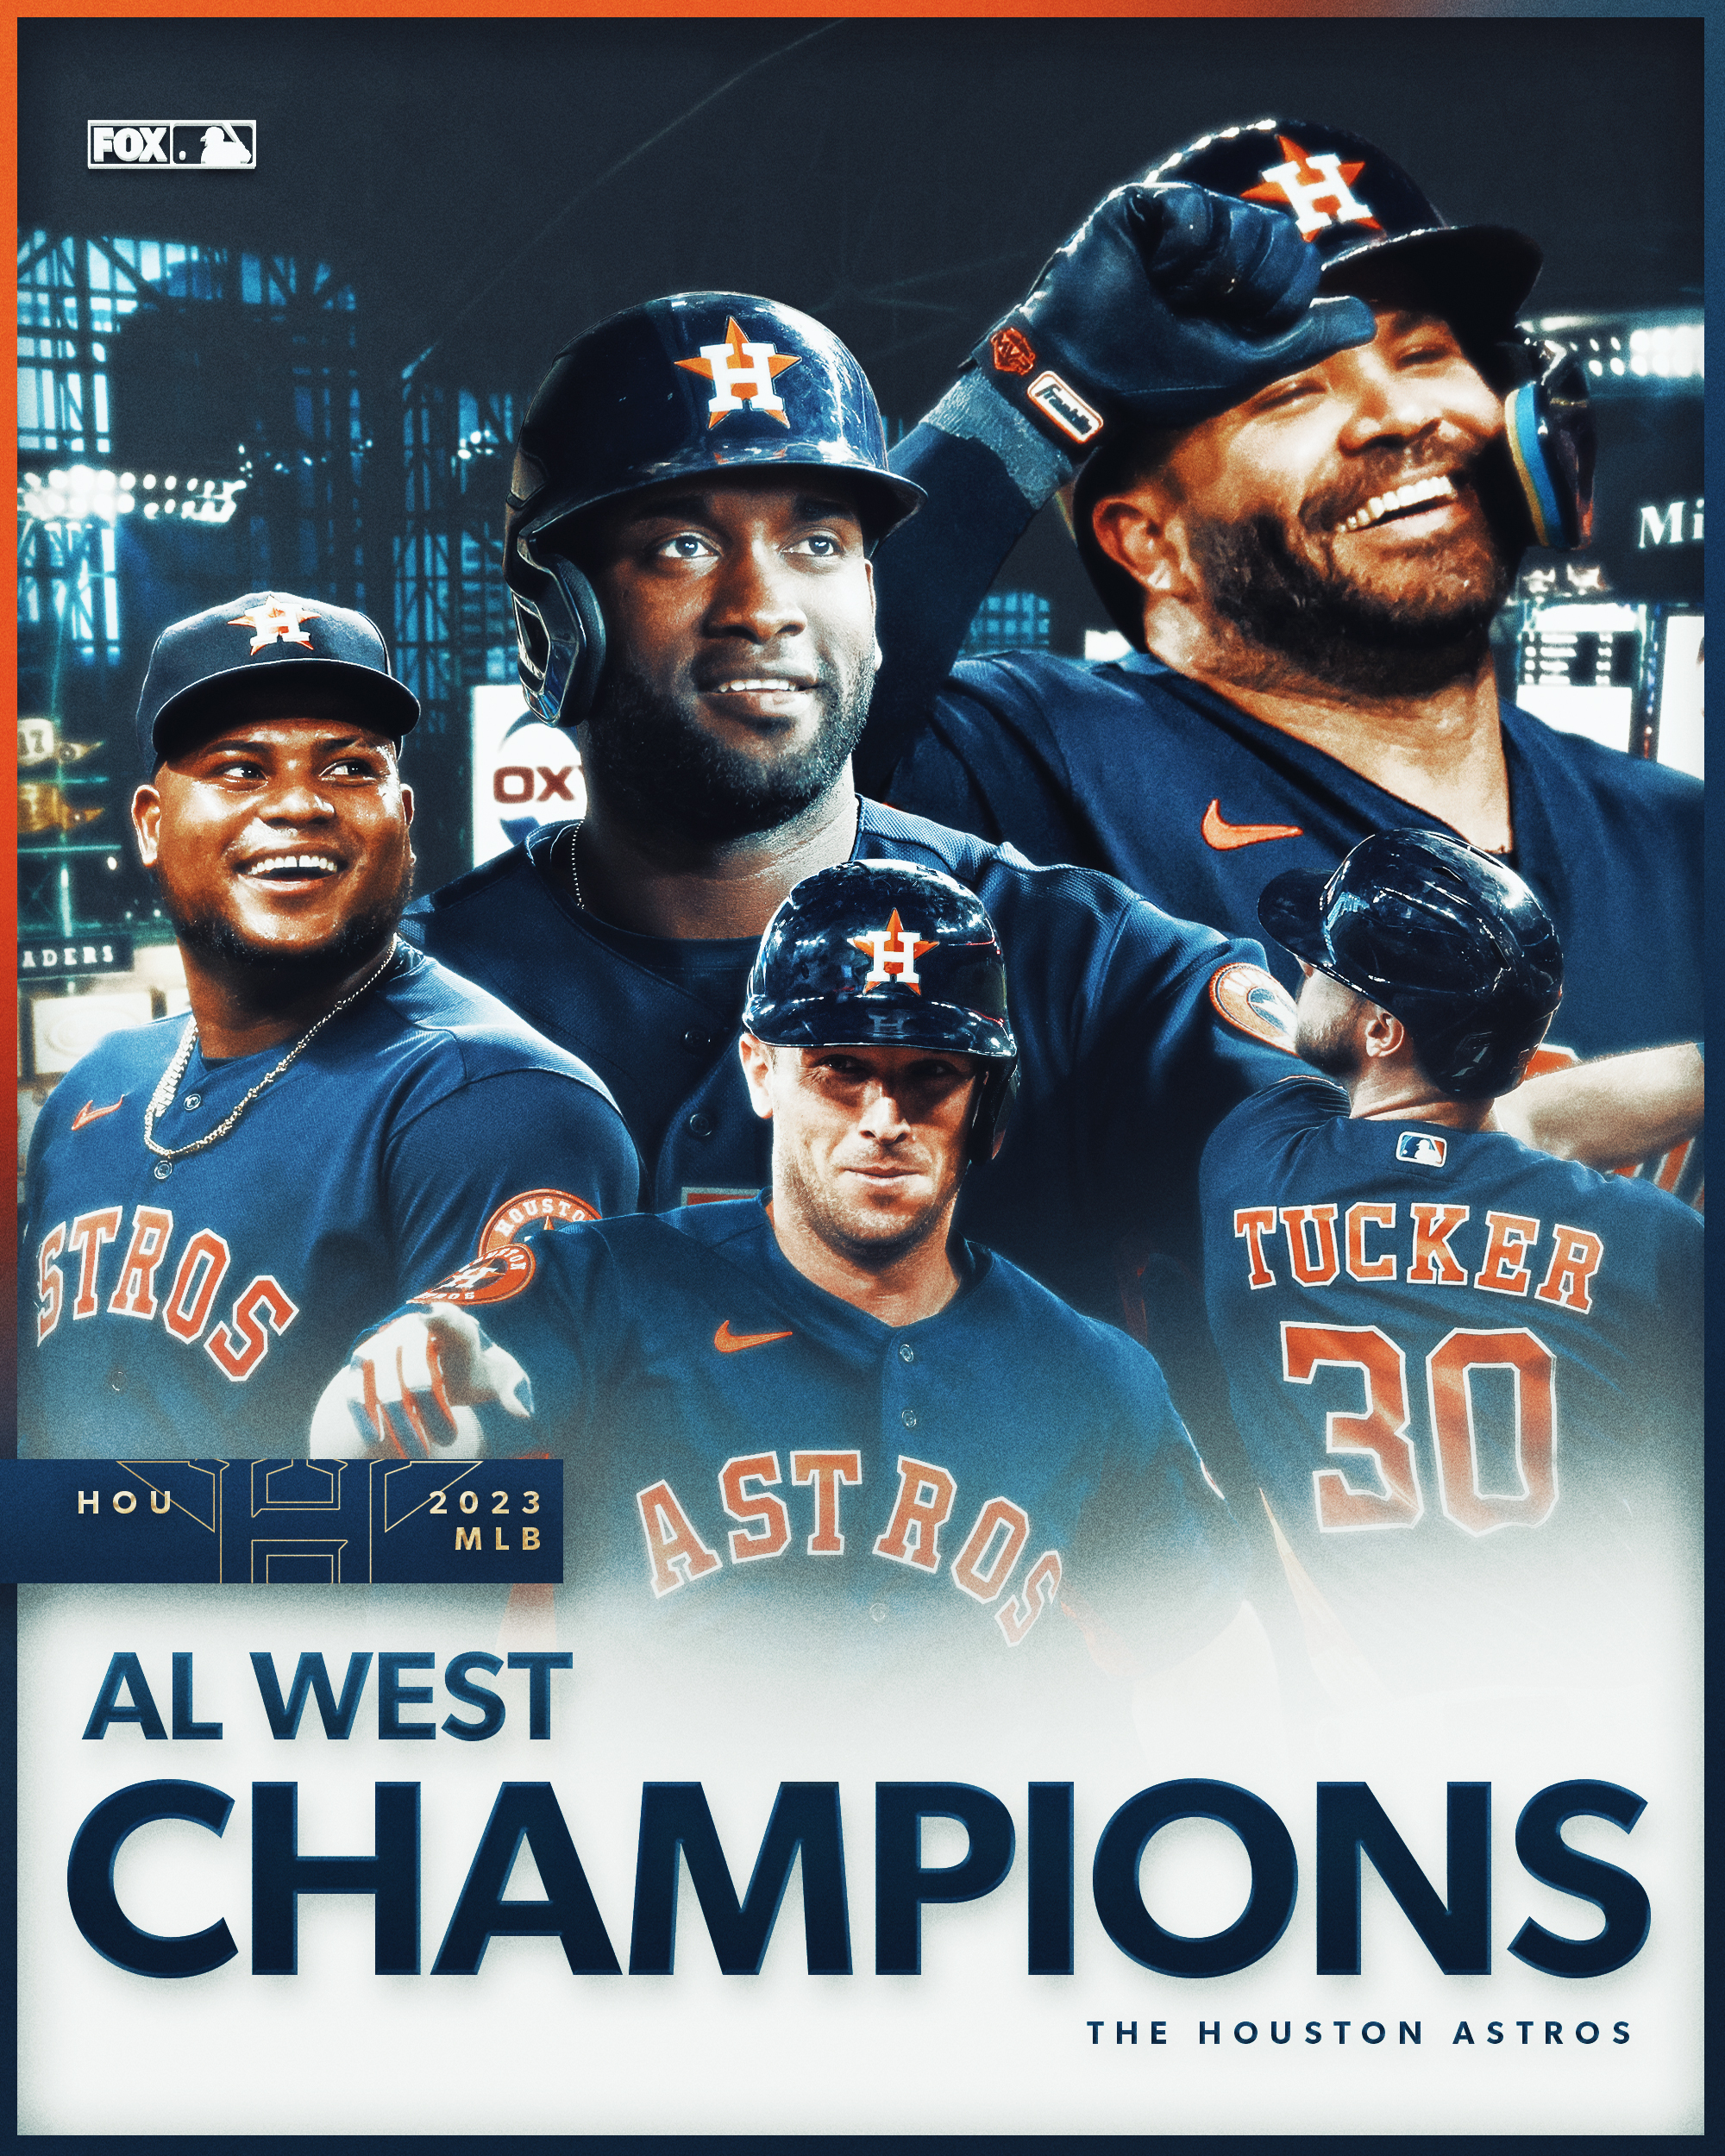 Houston Astros win American League West 